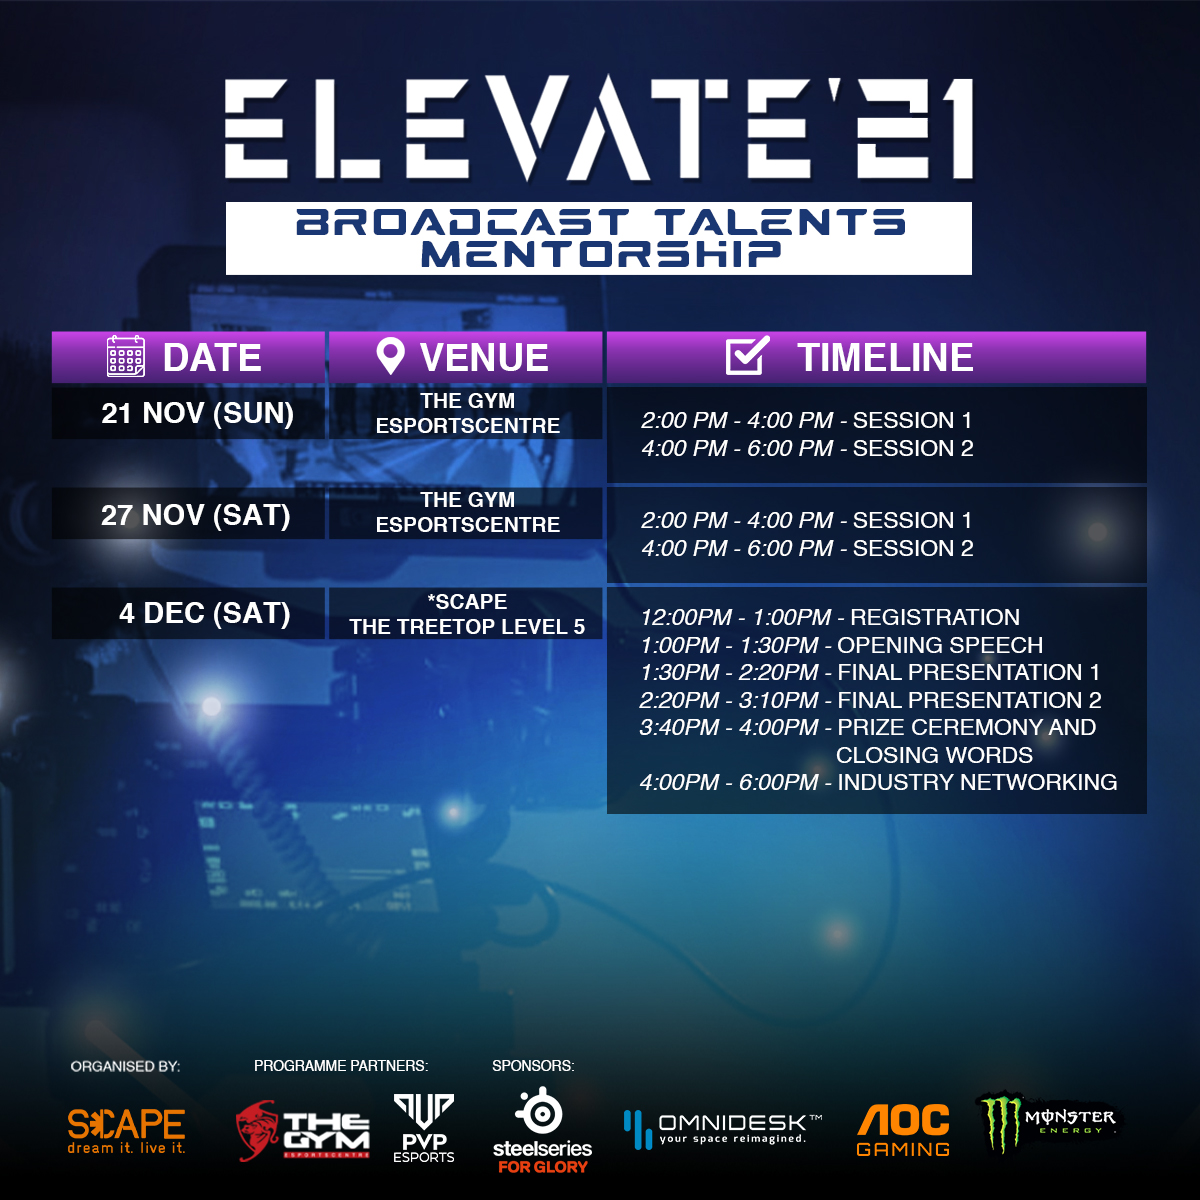 Elevate Full Schedule Events Broadcast Mentorship 2